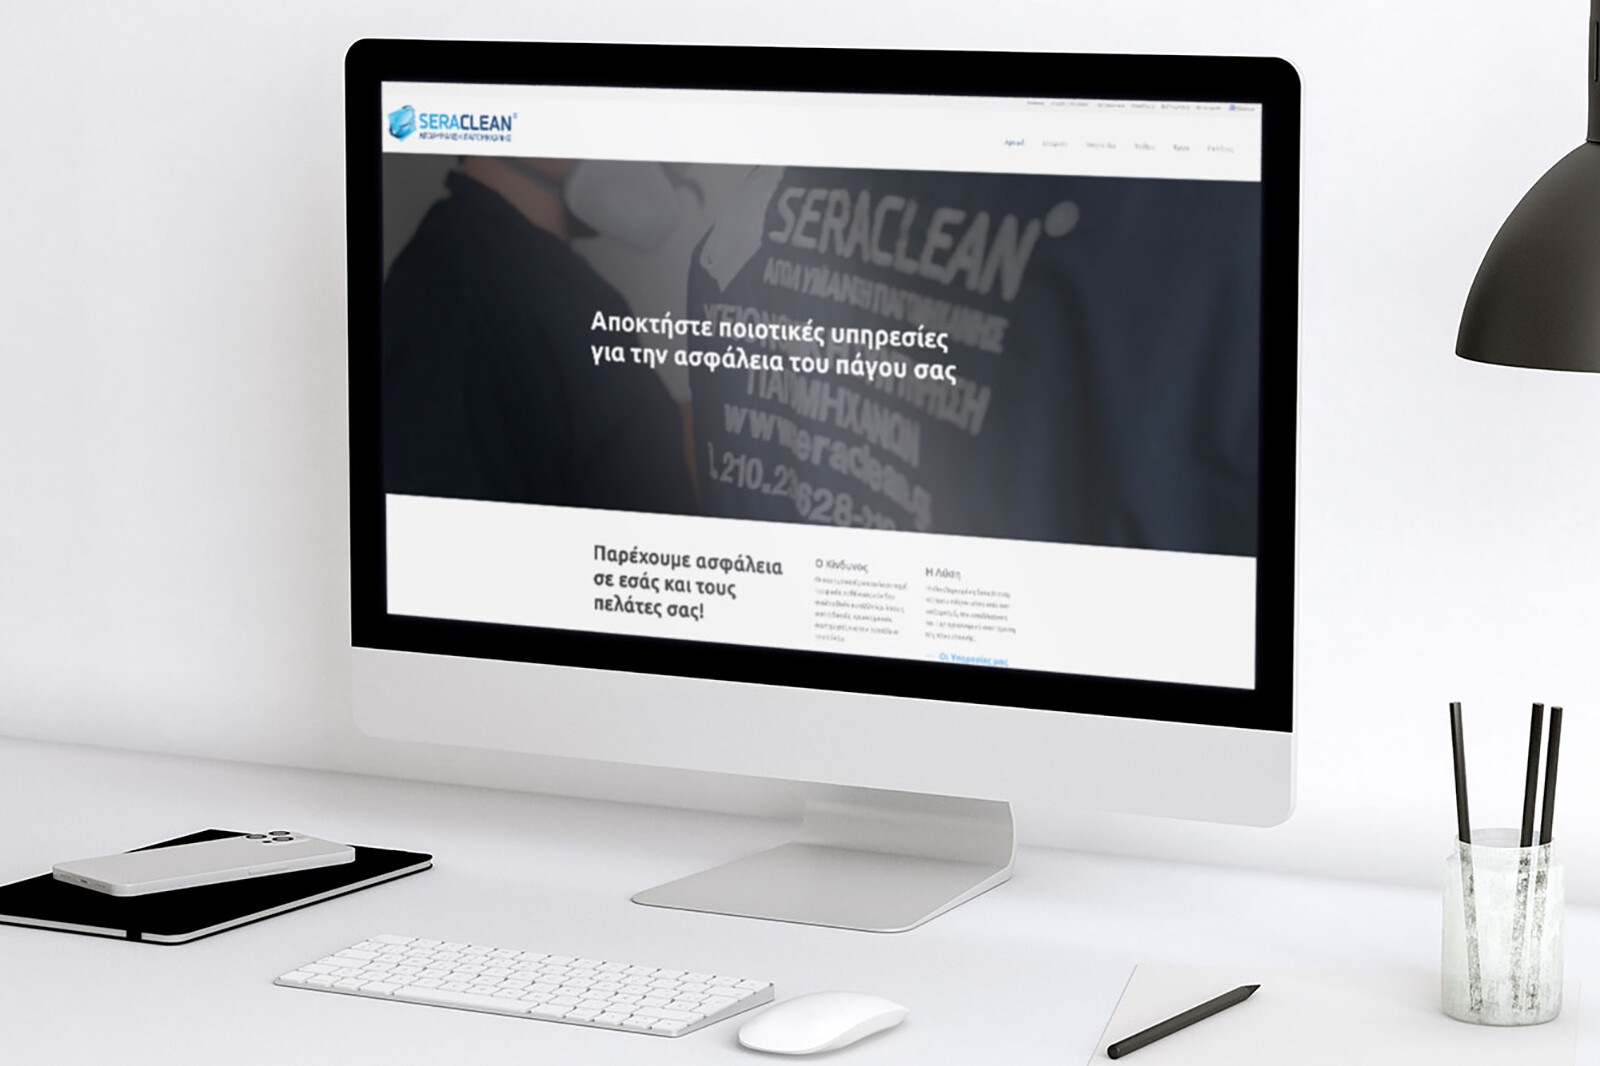 pc display with seraclean website